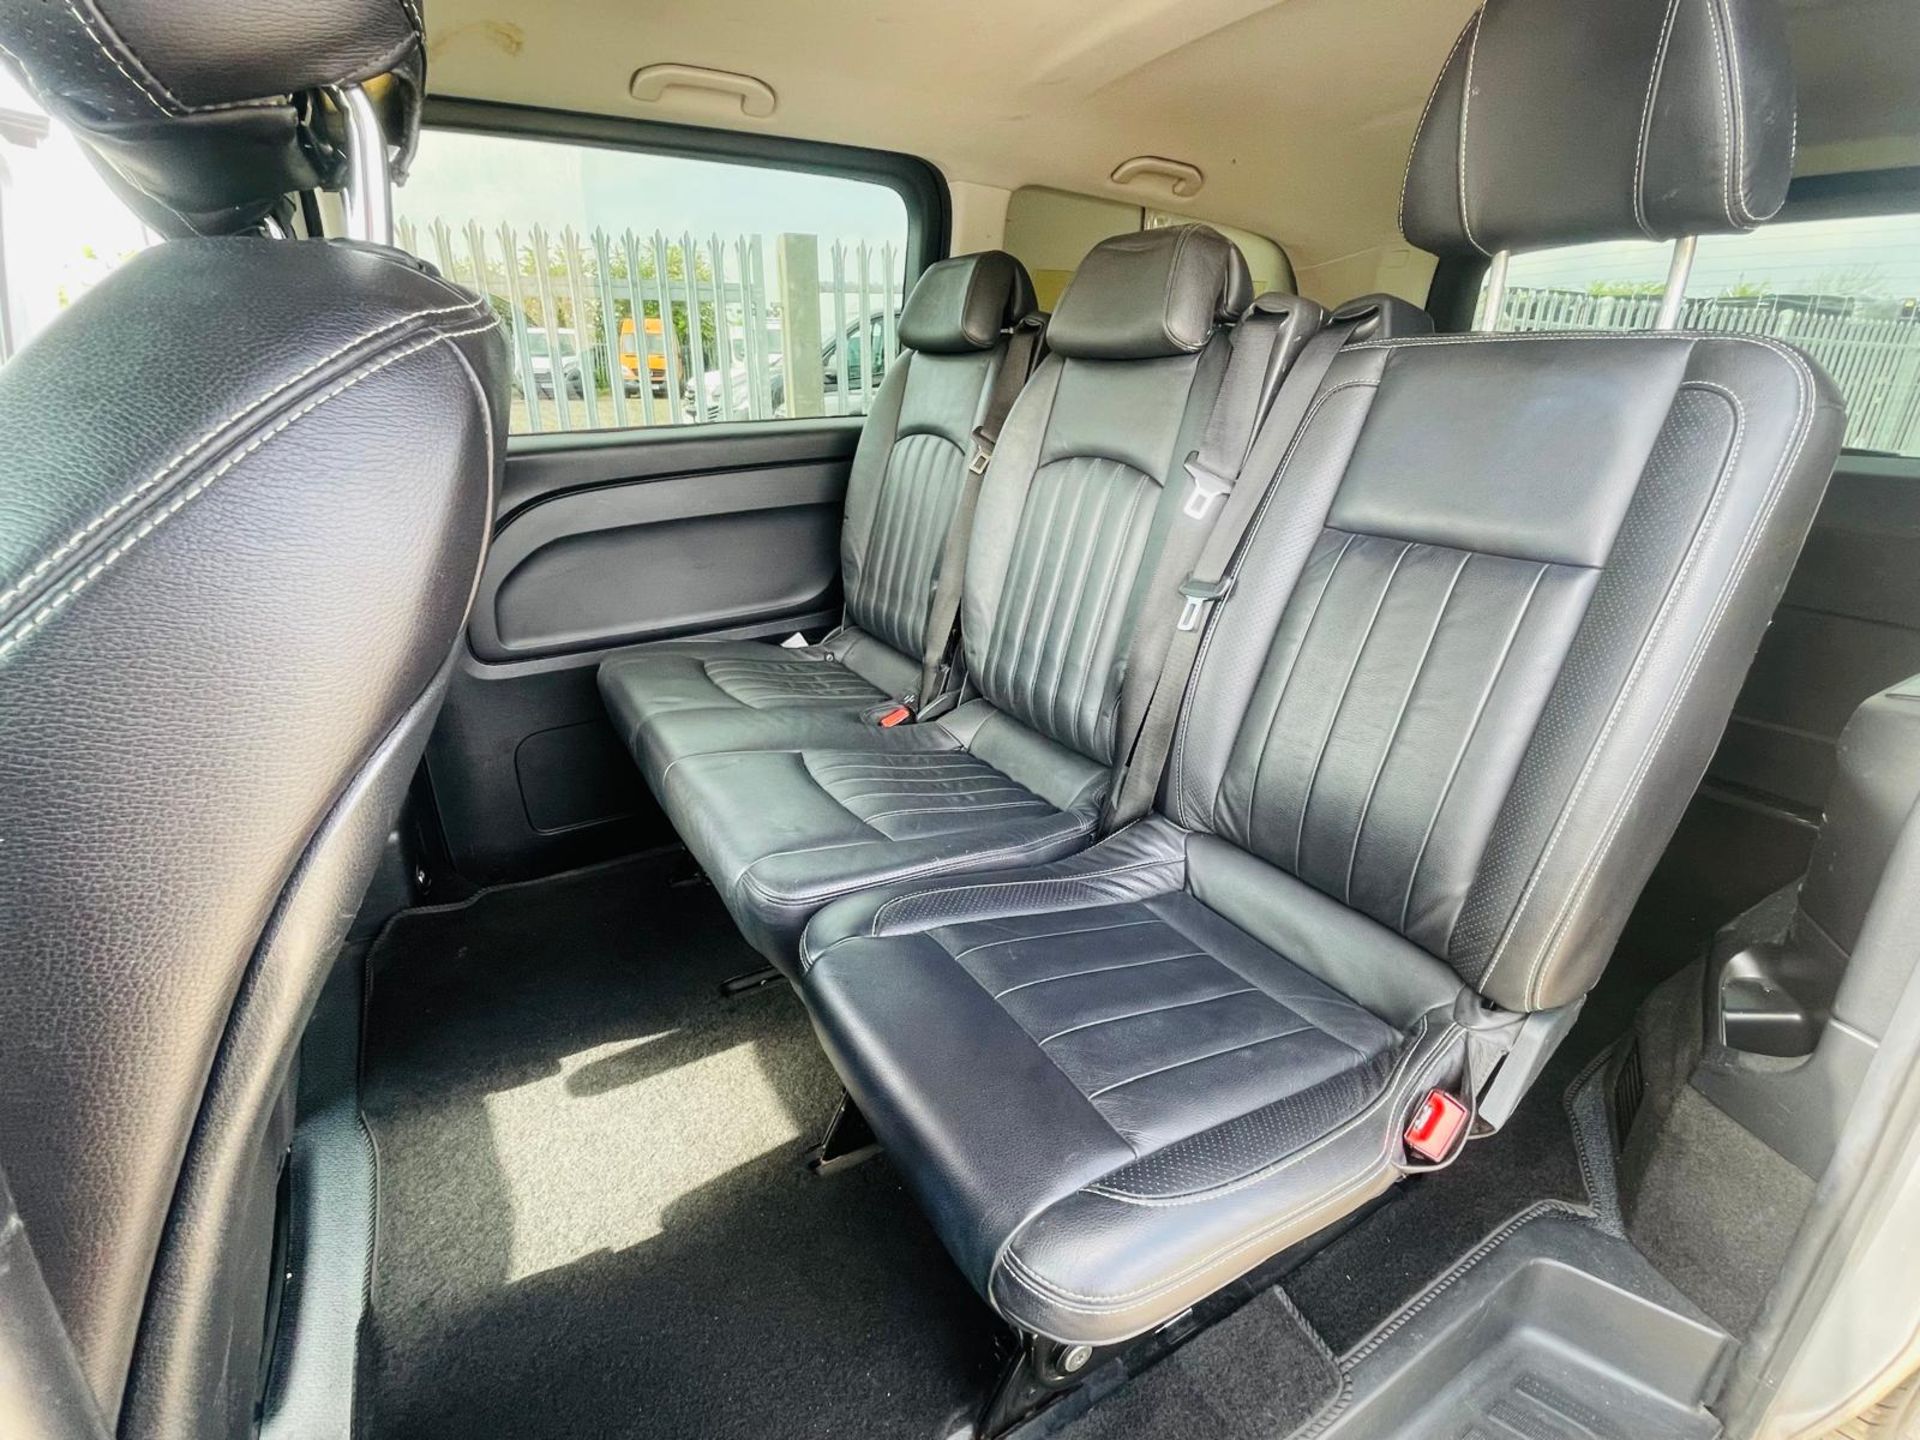 Mercedes-Benz Vito Premium 2.1 119 CDI 7G Tronic Crew Cab LWB Automatic 2019'19 Reg'- Alloy Wheels - Image 25 of 31